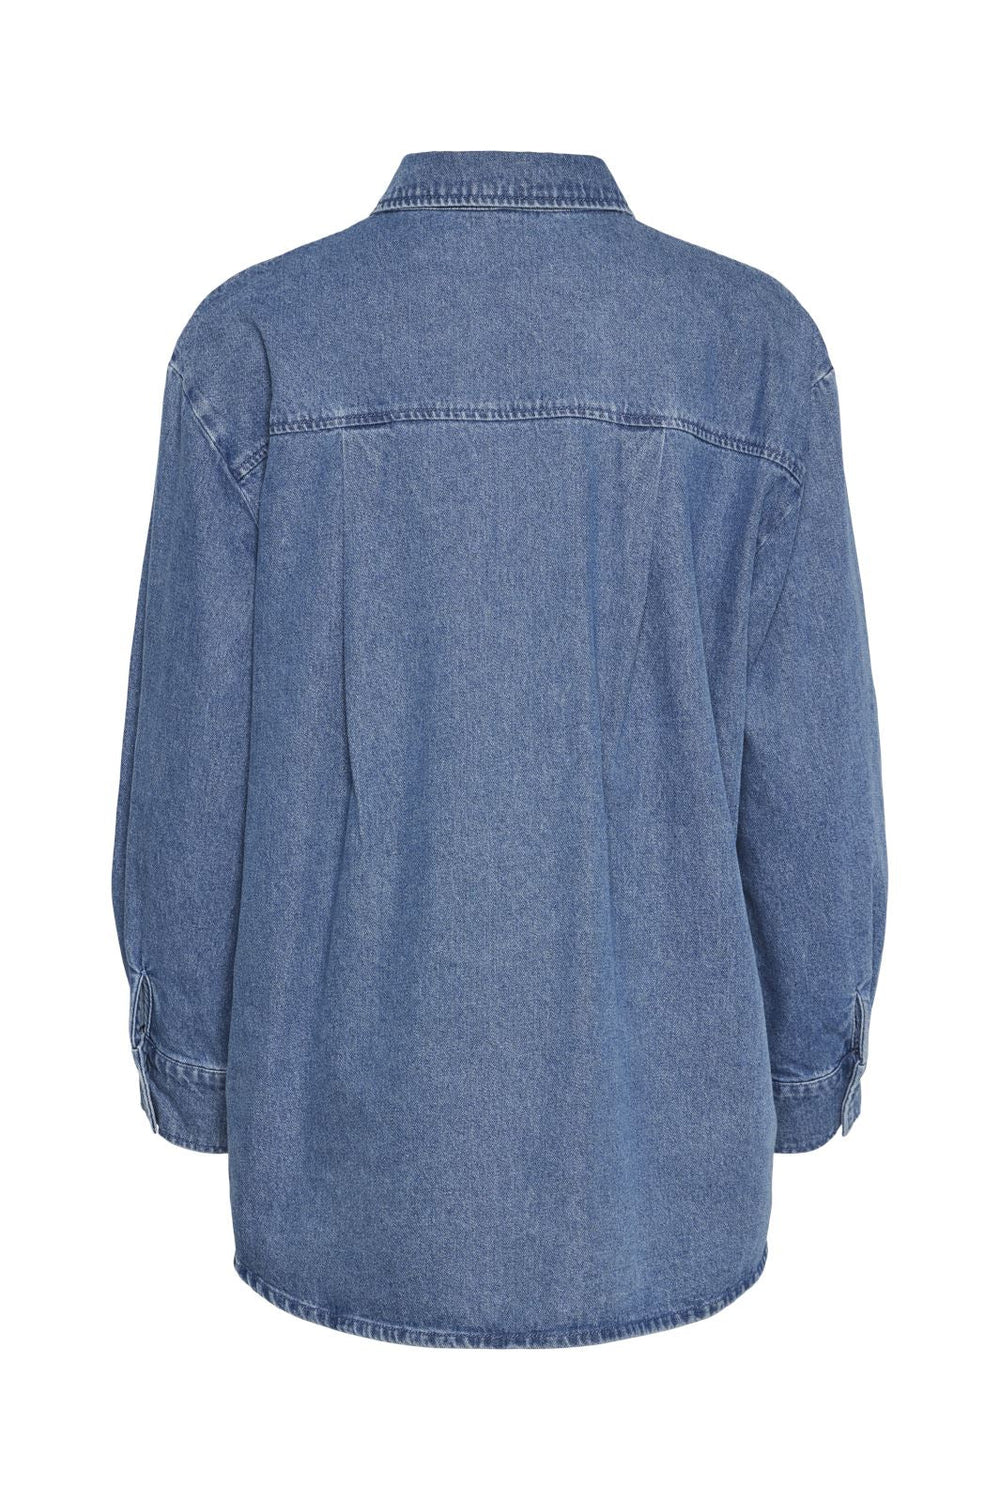 Pieces - Pcmaisie Ls Denim Shirt - 4544392 Medium Blue Denim